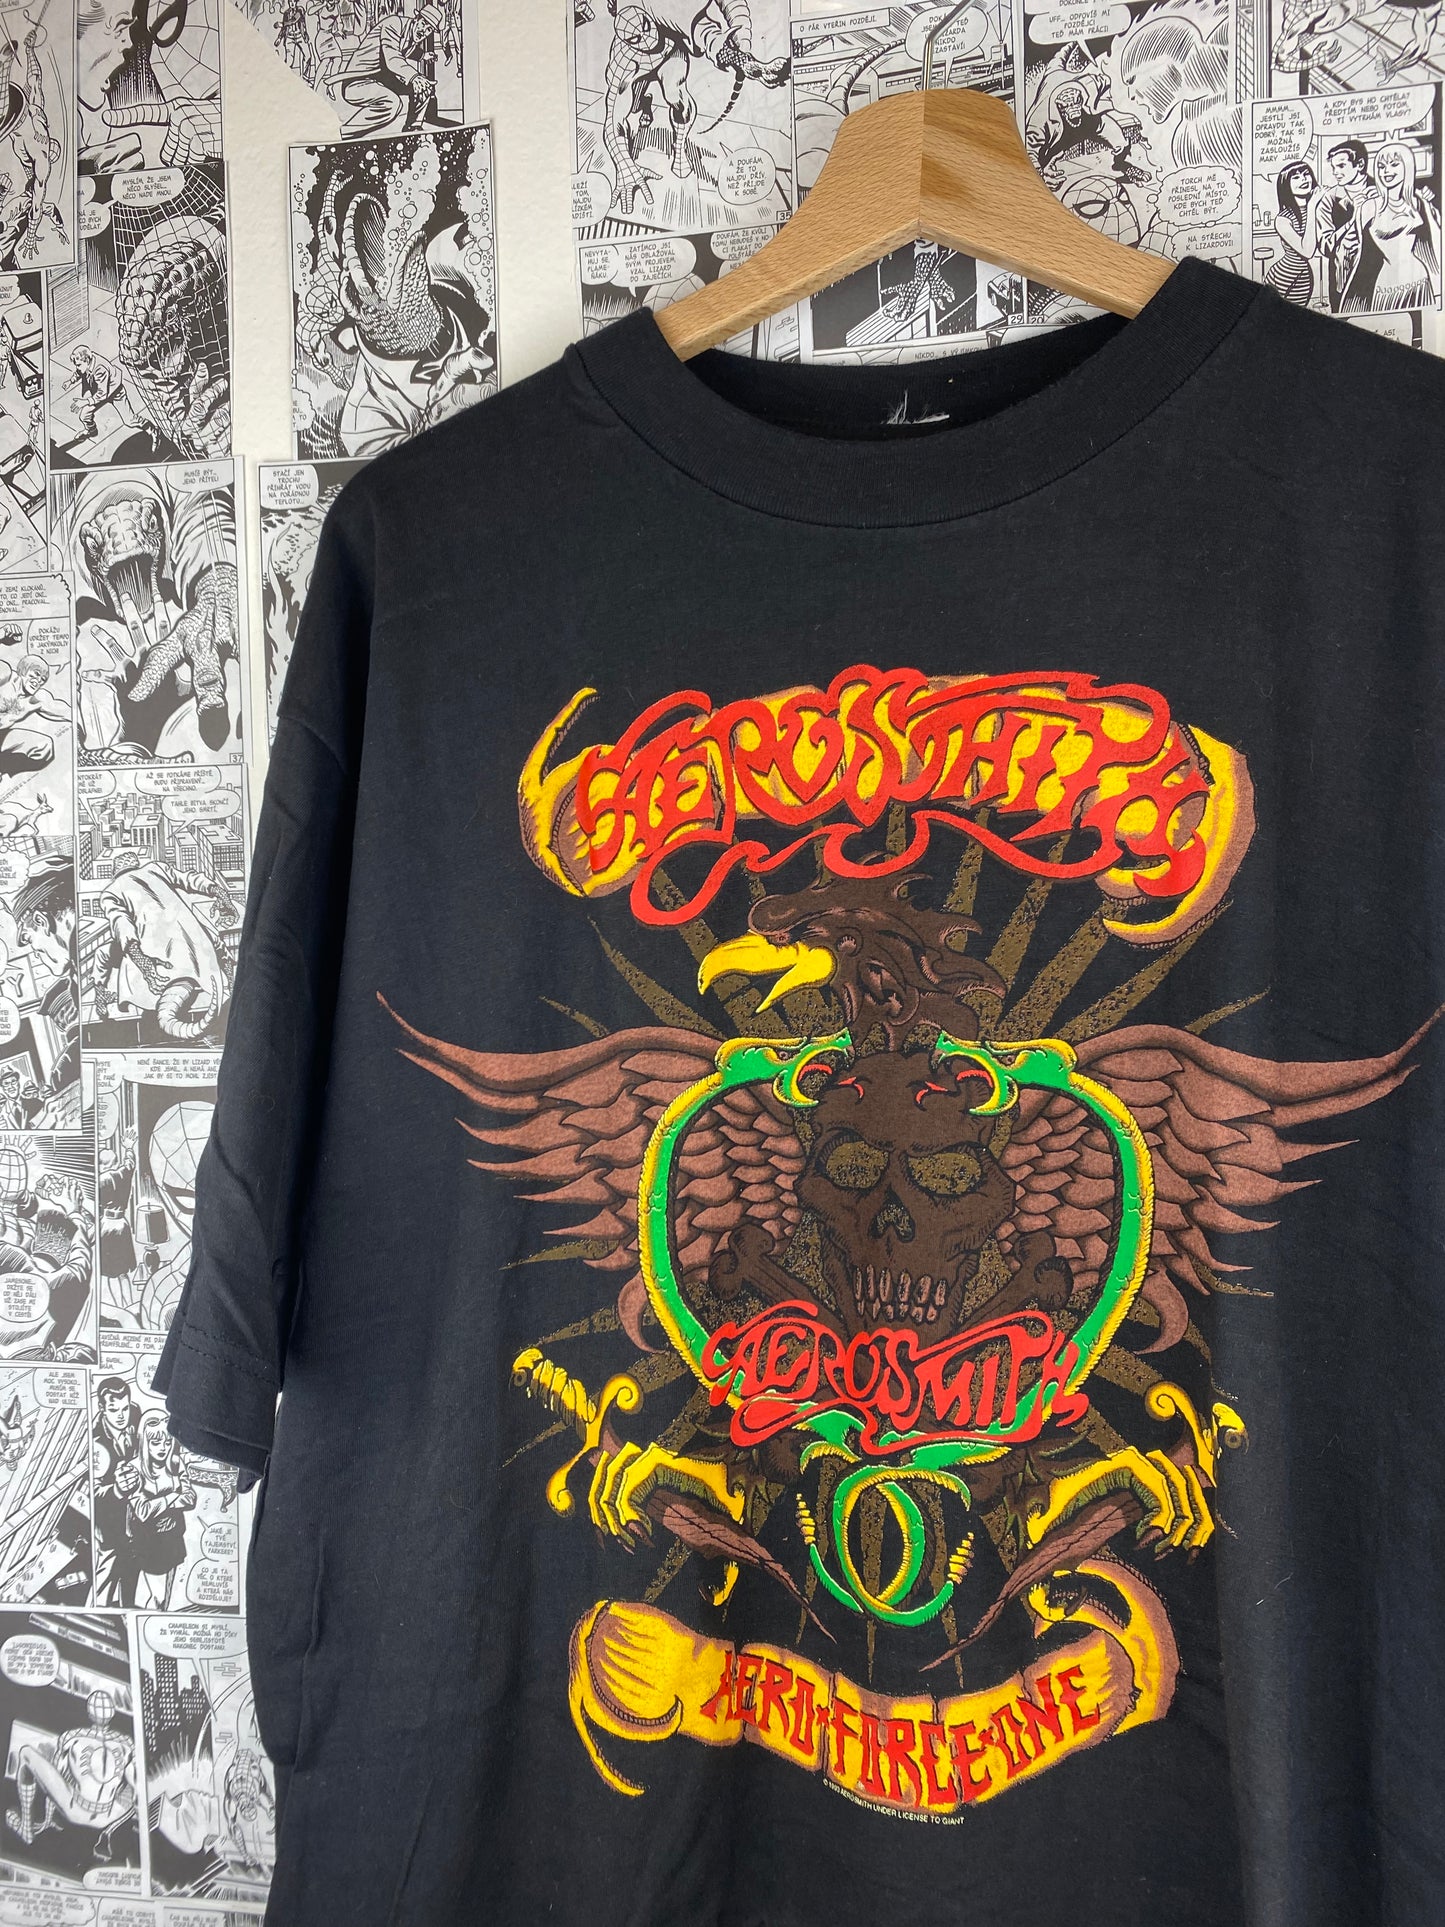 Vintage Aerosmith 1993 tour t-shirt - size XL